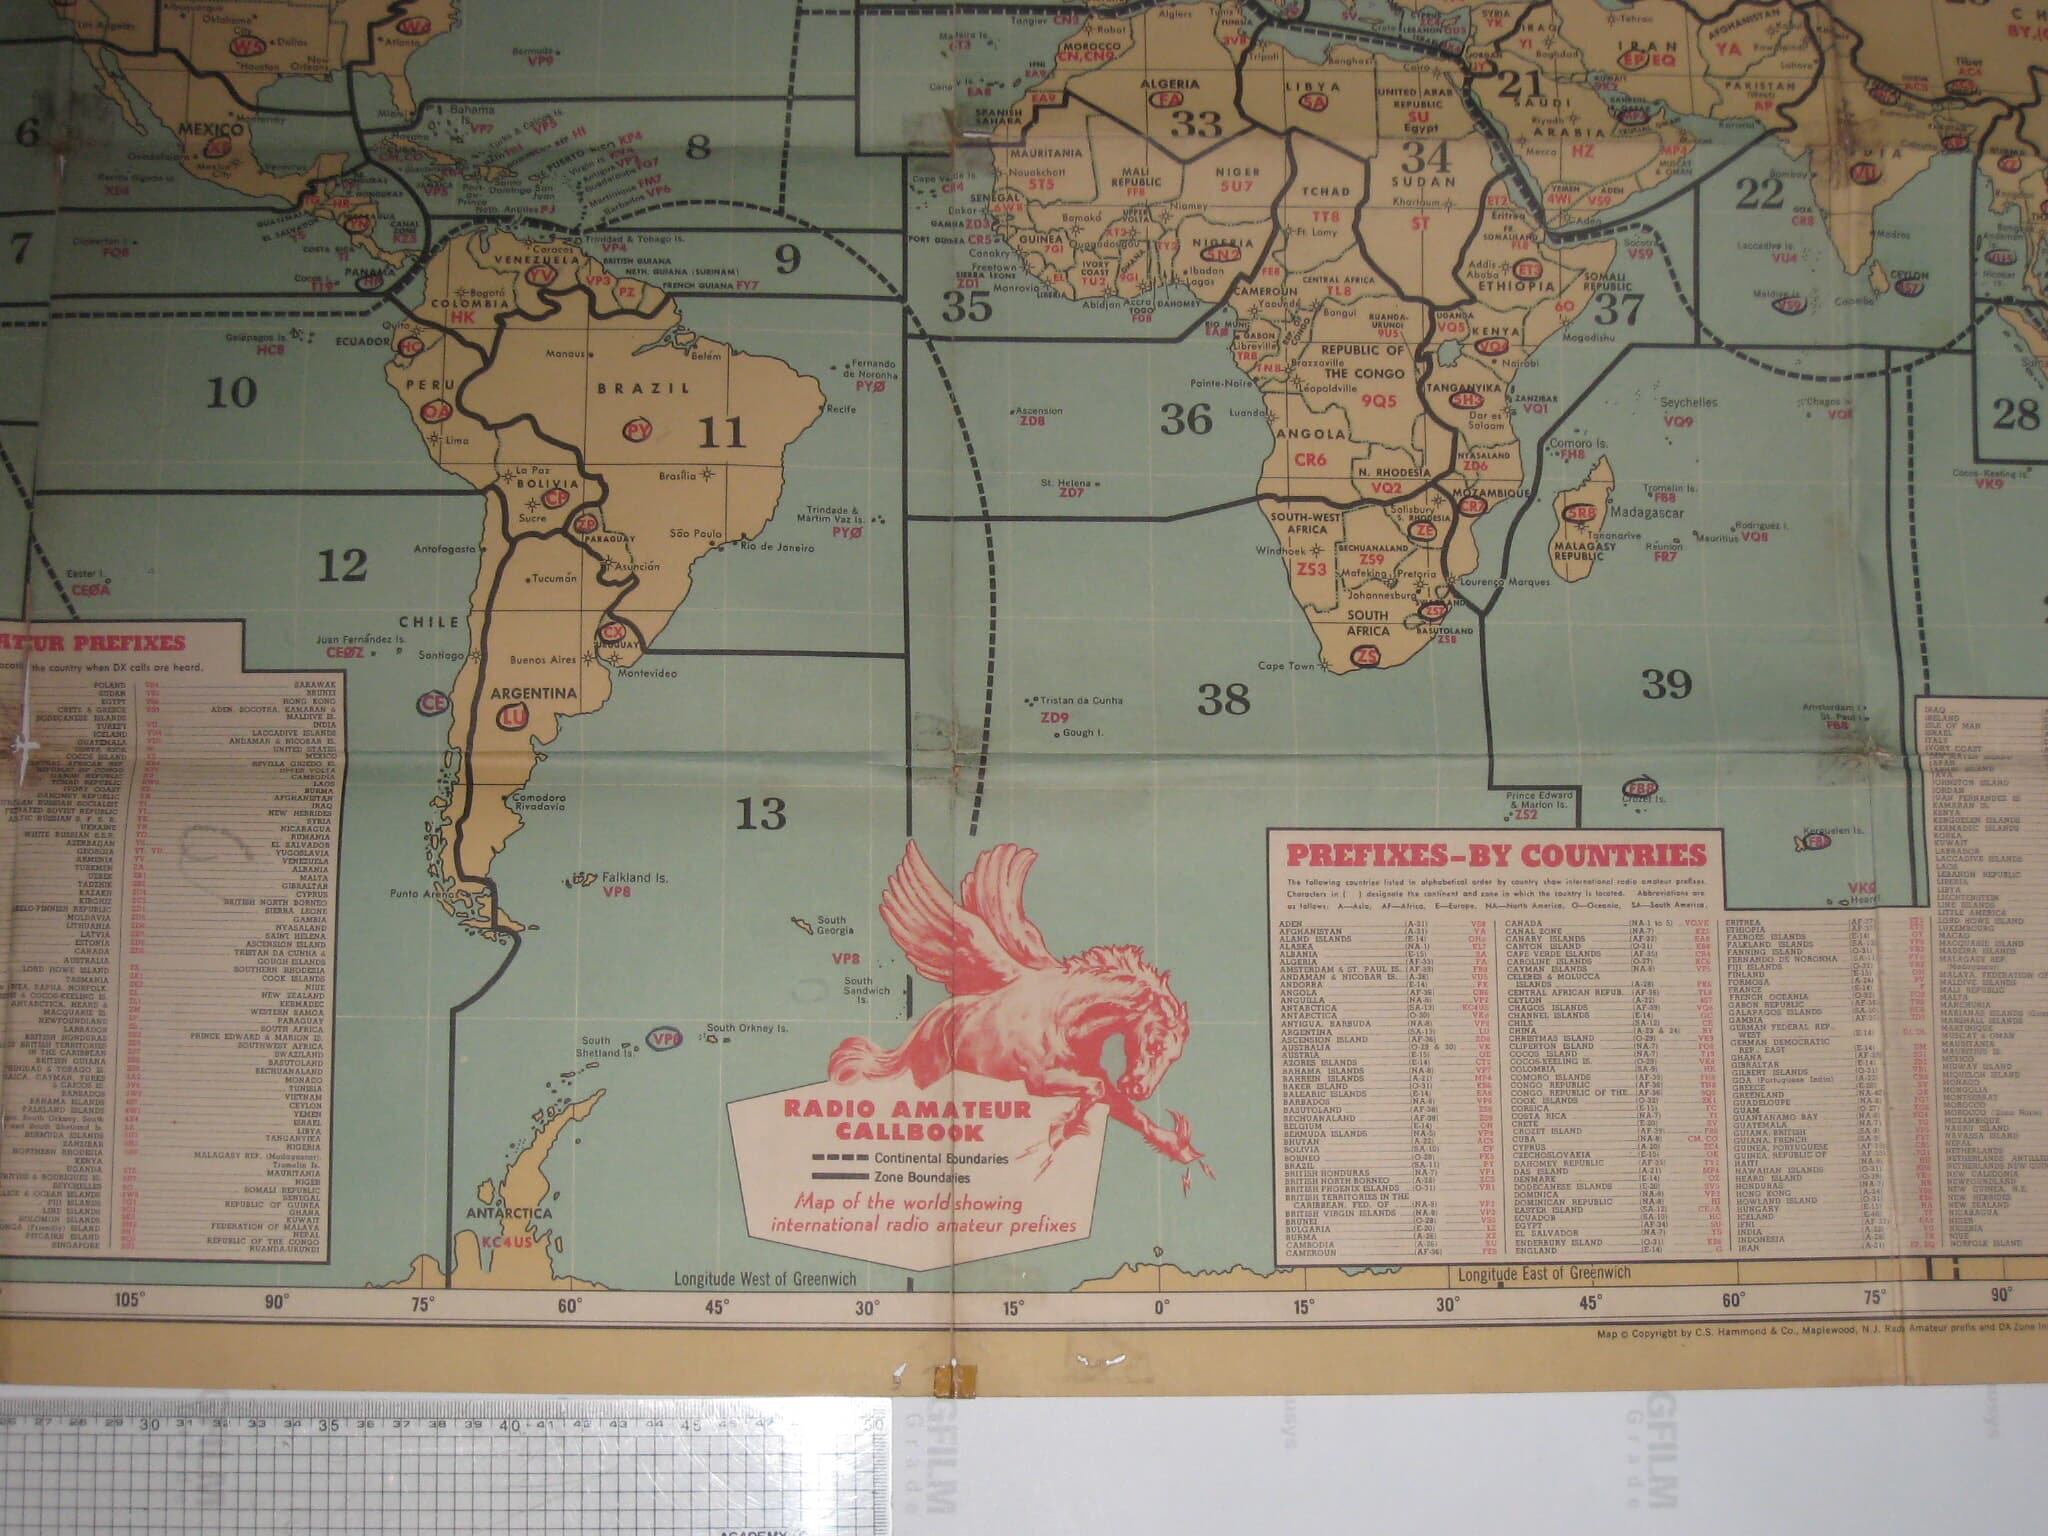 World Map Showing Intertional Radio Amateur Prefixes 국제 라디오 아마추어 접두사를 보여주는 세계지도